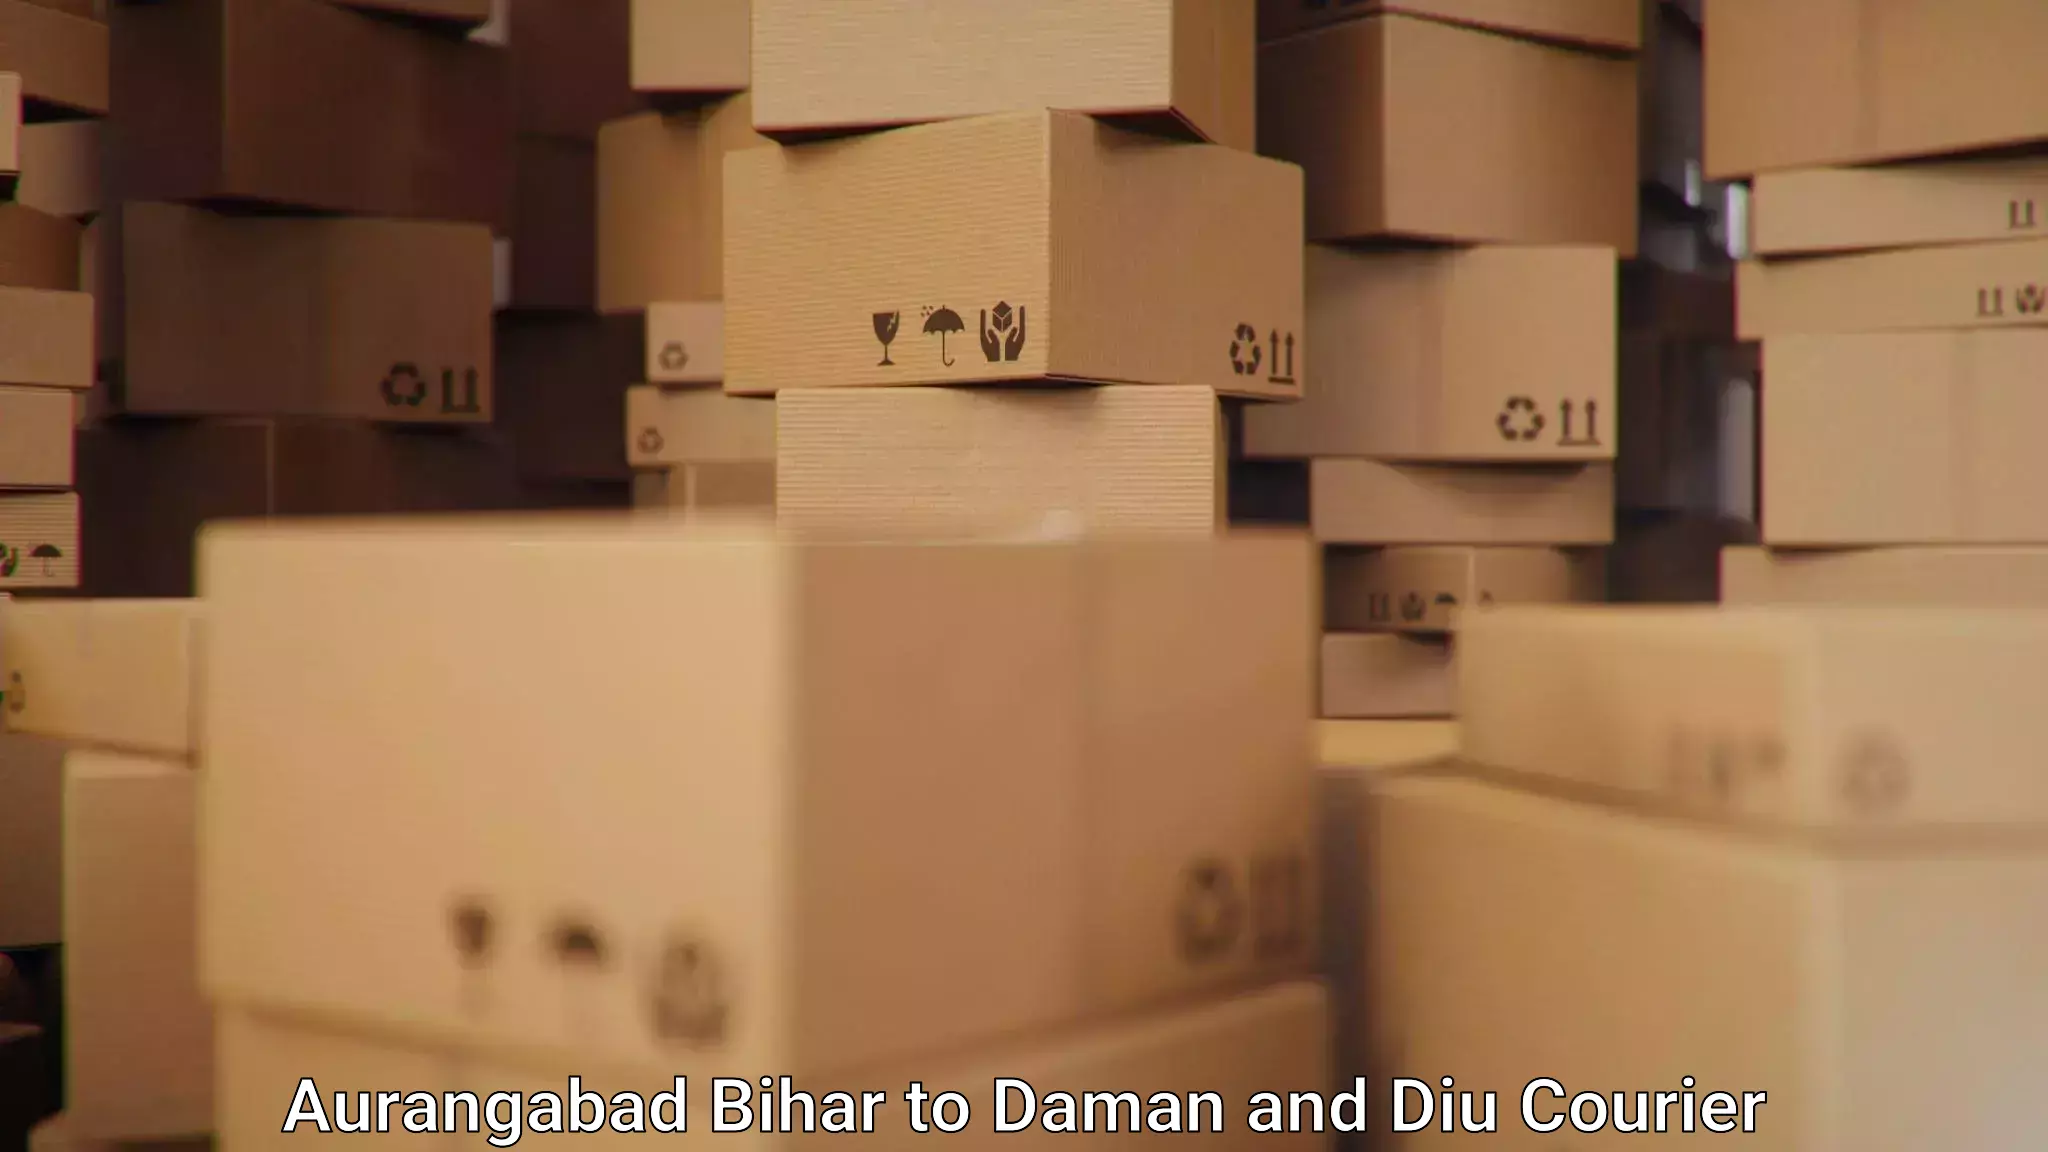 High-speed delivery Aurangabad Bihar to Diu